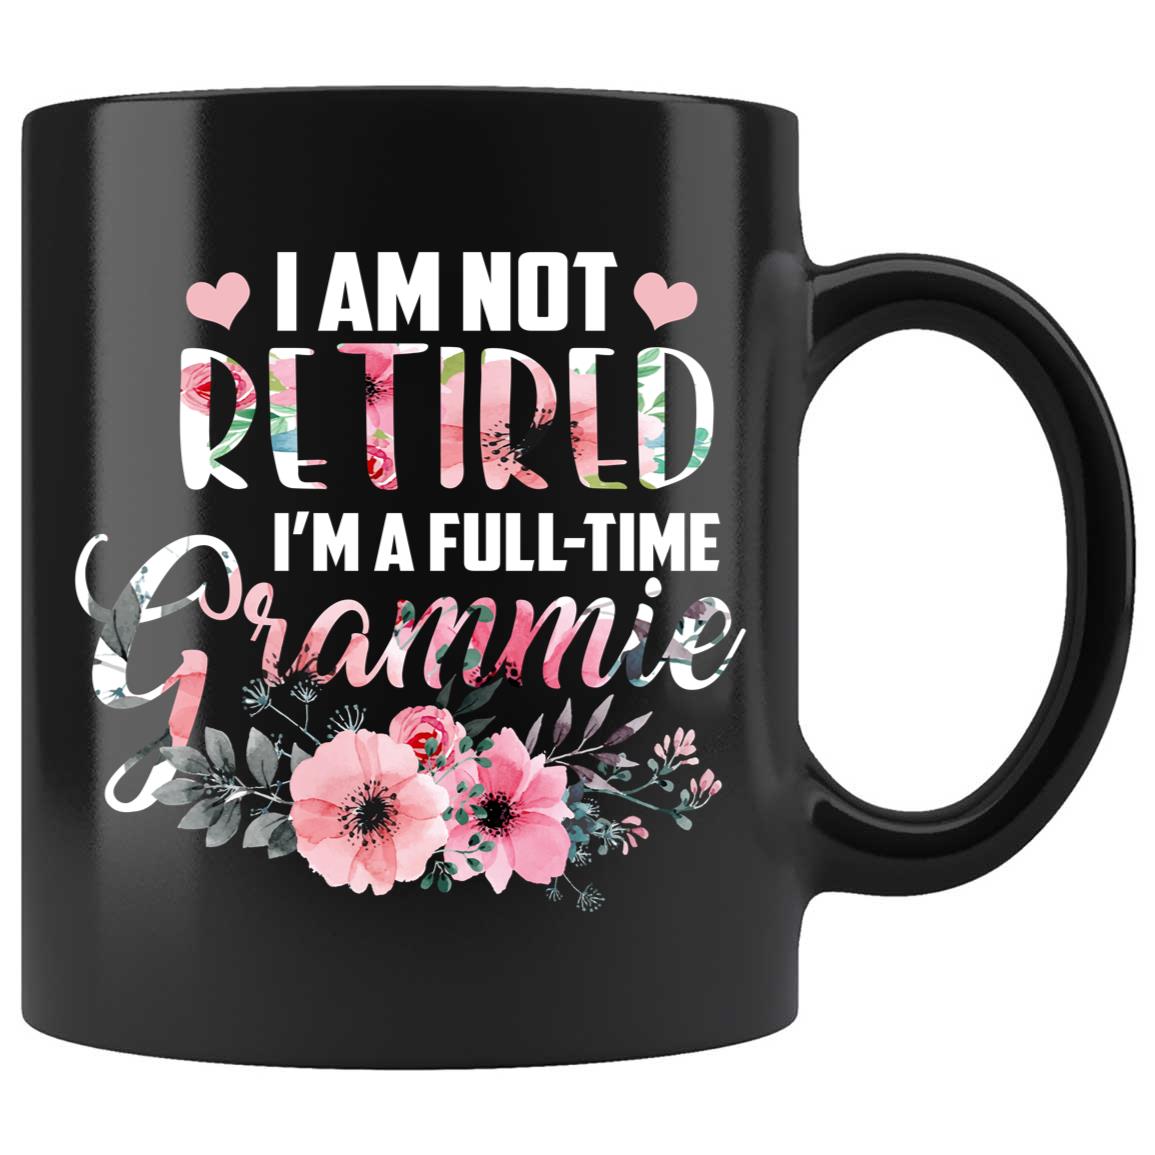 Skitongifts Funny Ceramic Coffee Mug Novelty M30-Nh201221-I'm Not Retired. I'm A Full Time Grammie Blmisvh